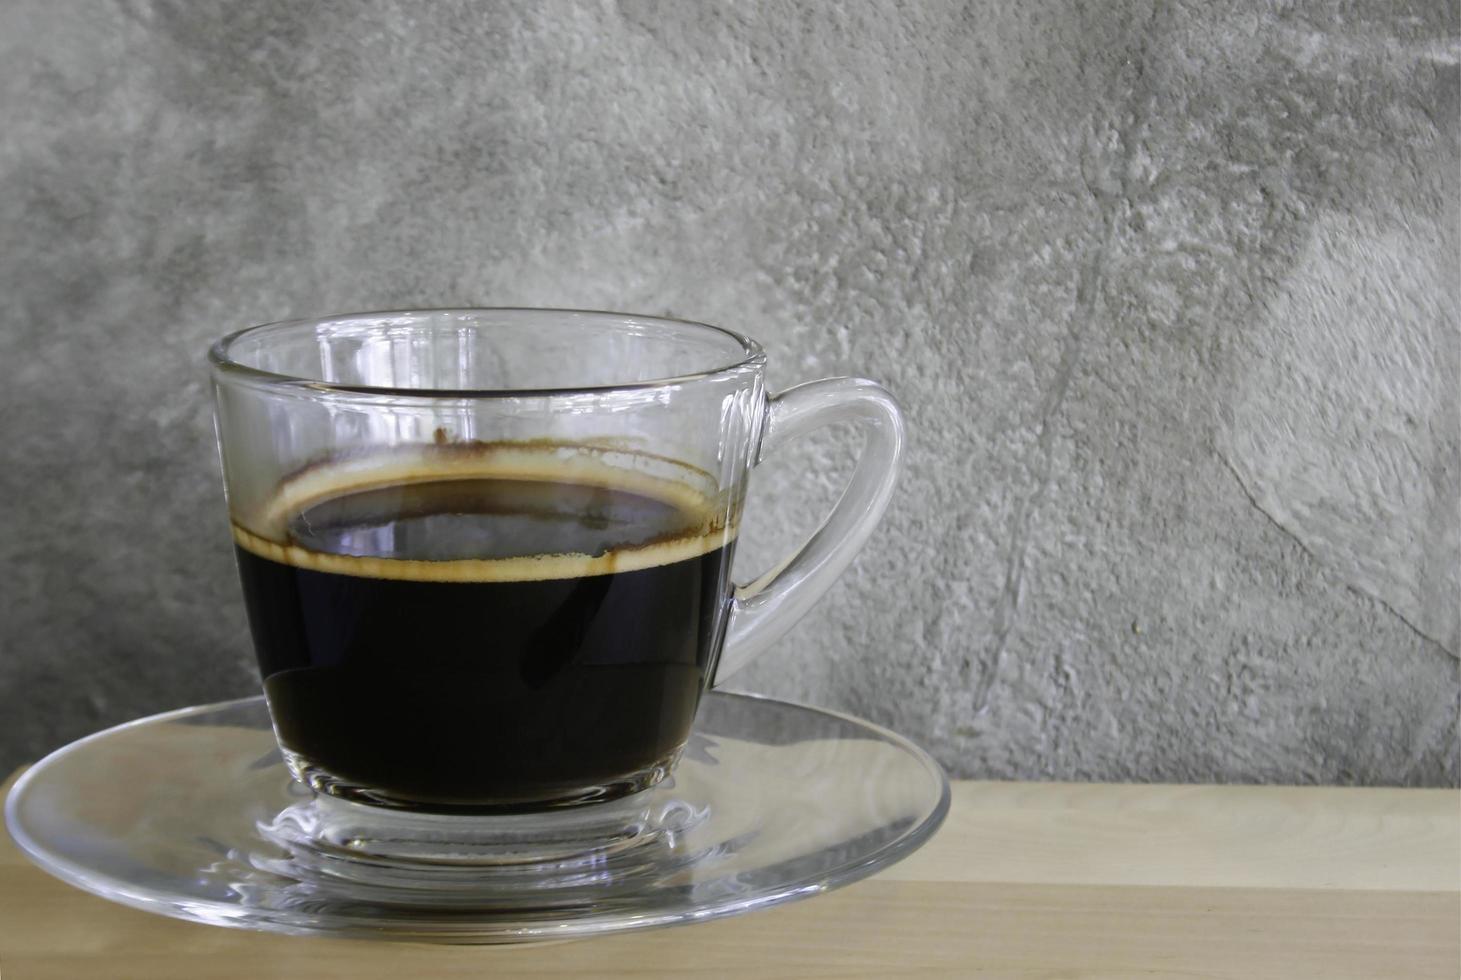 chiara tazza di caffè espresso foto